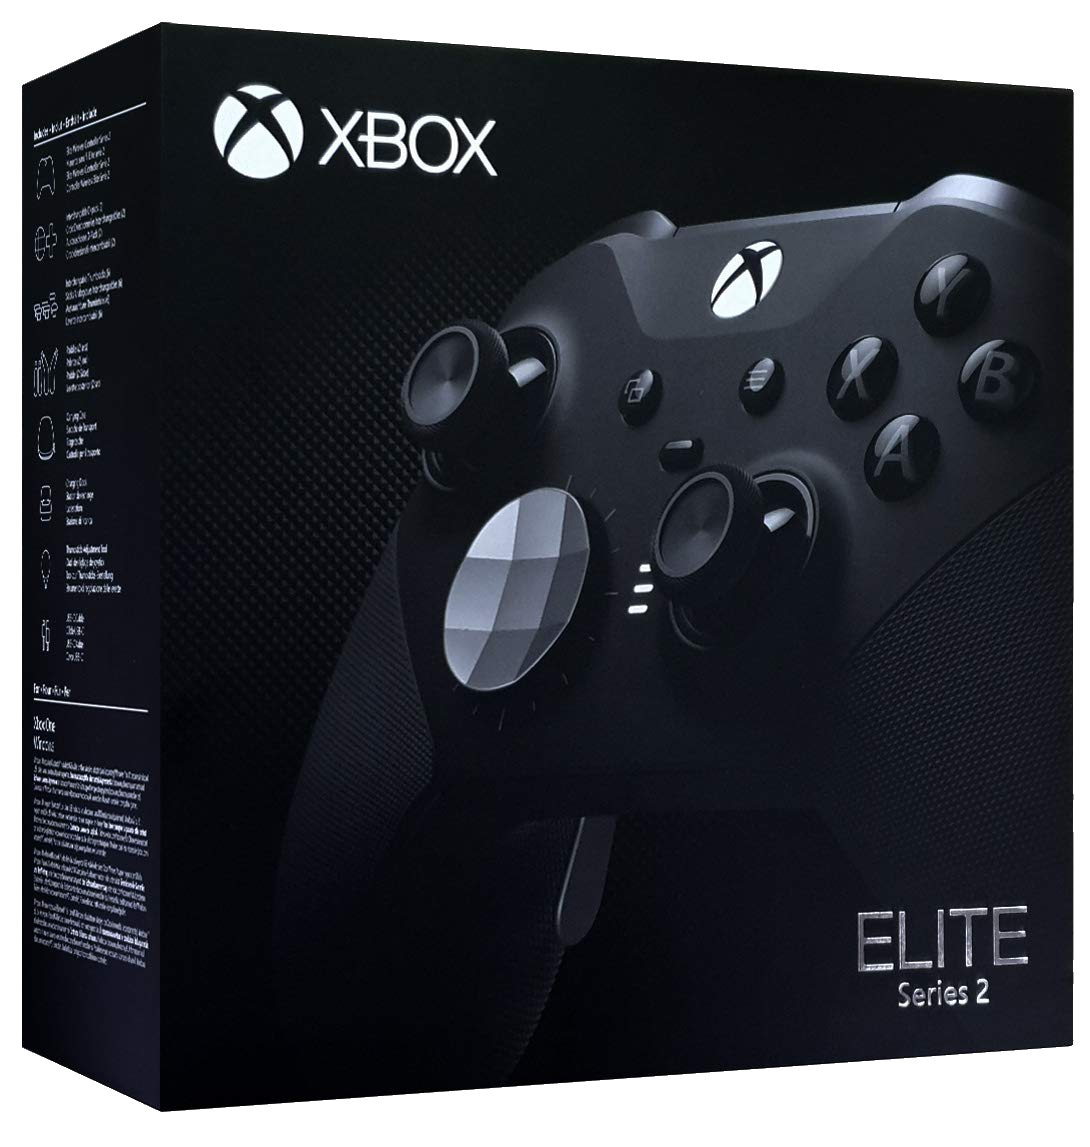 series 2 elite controller release date